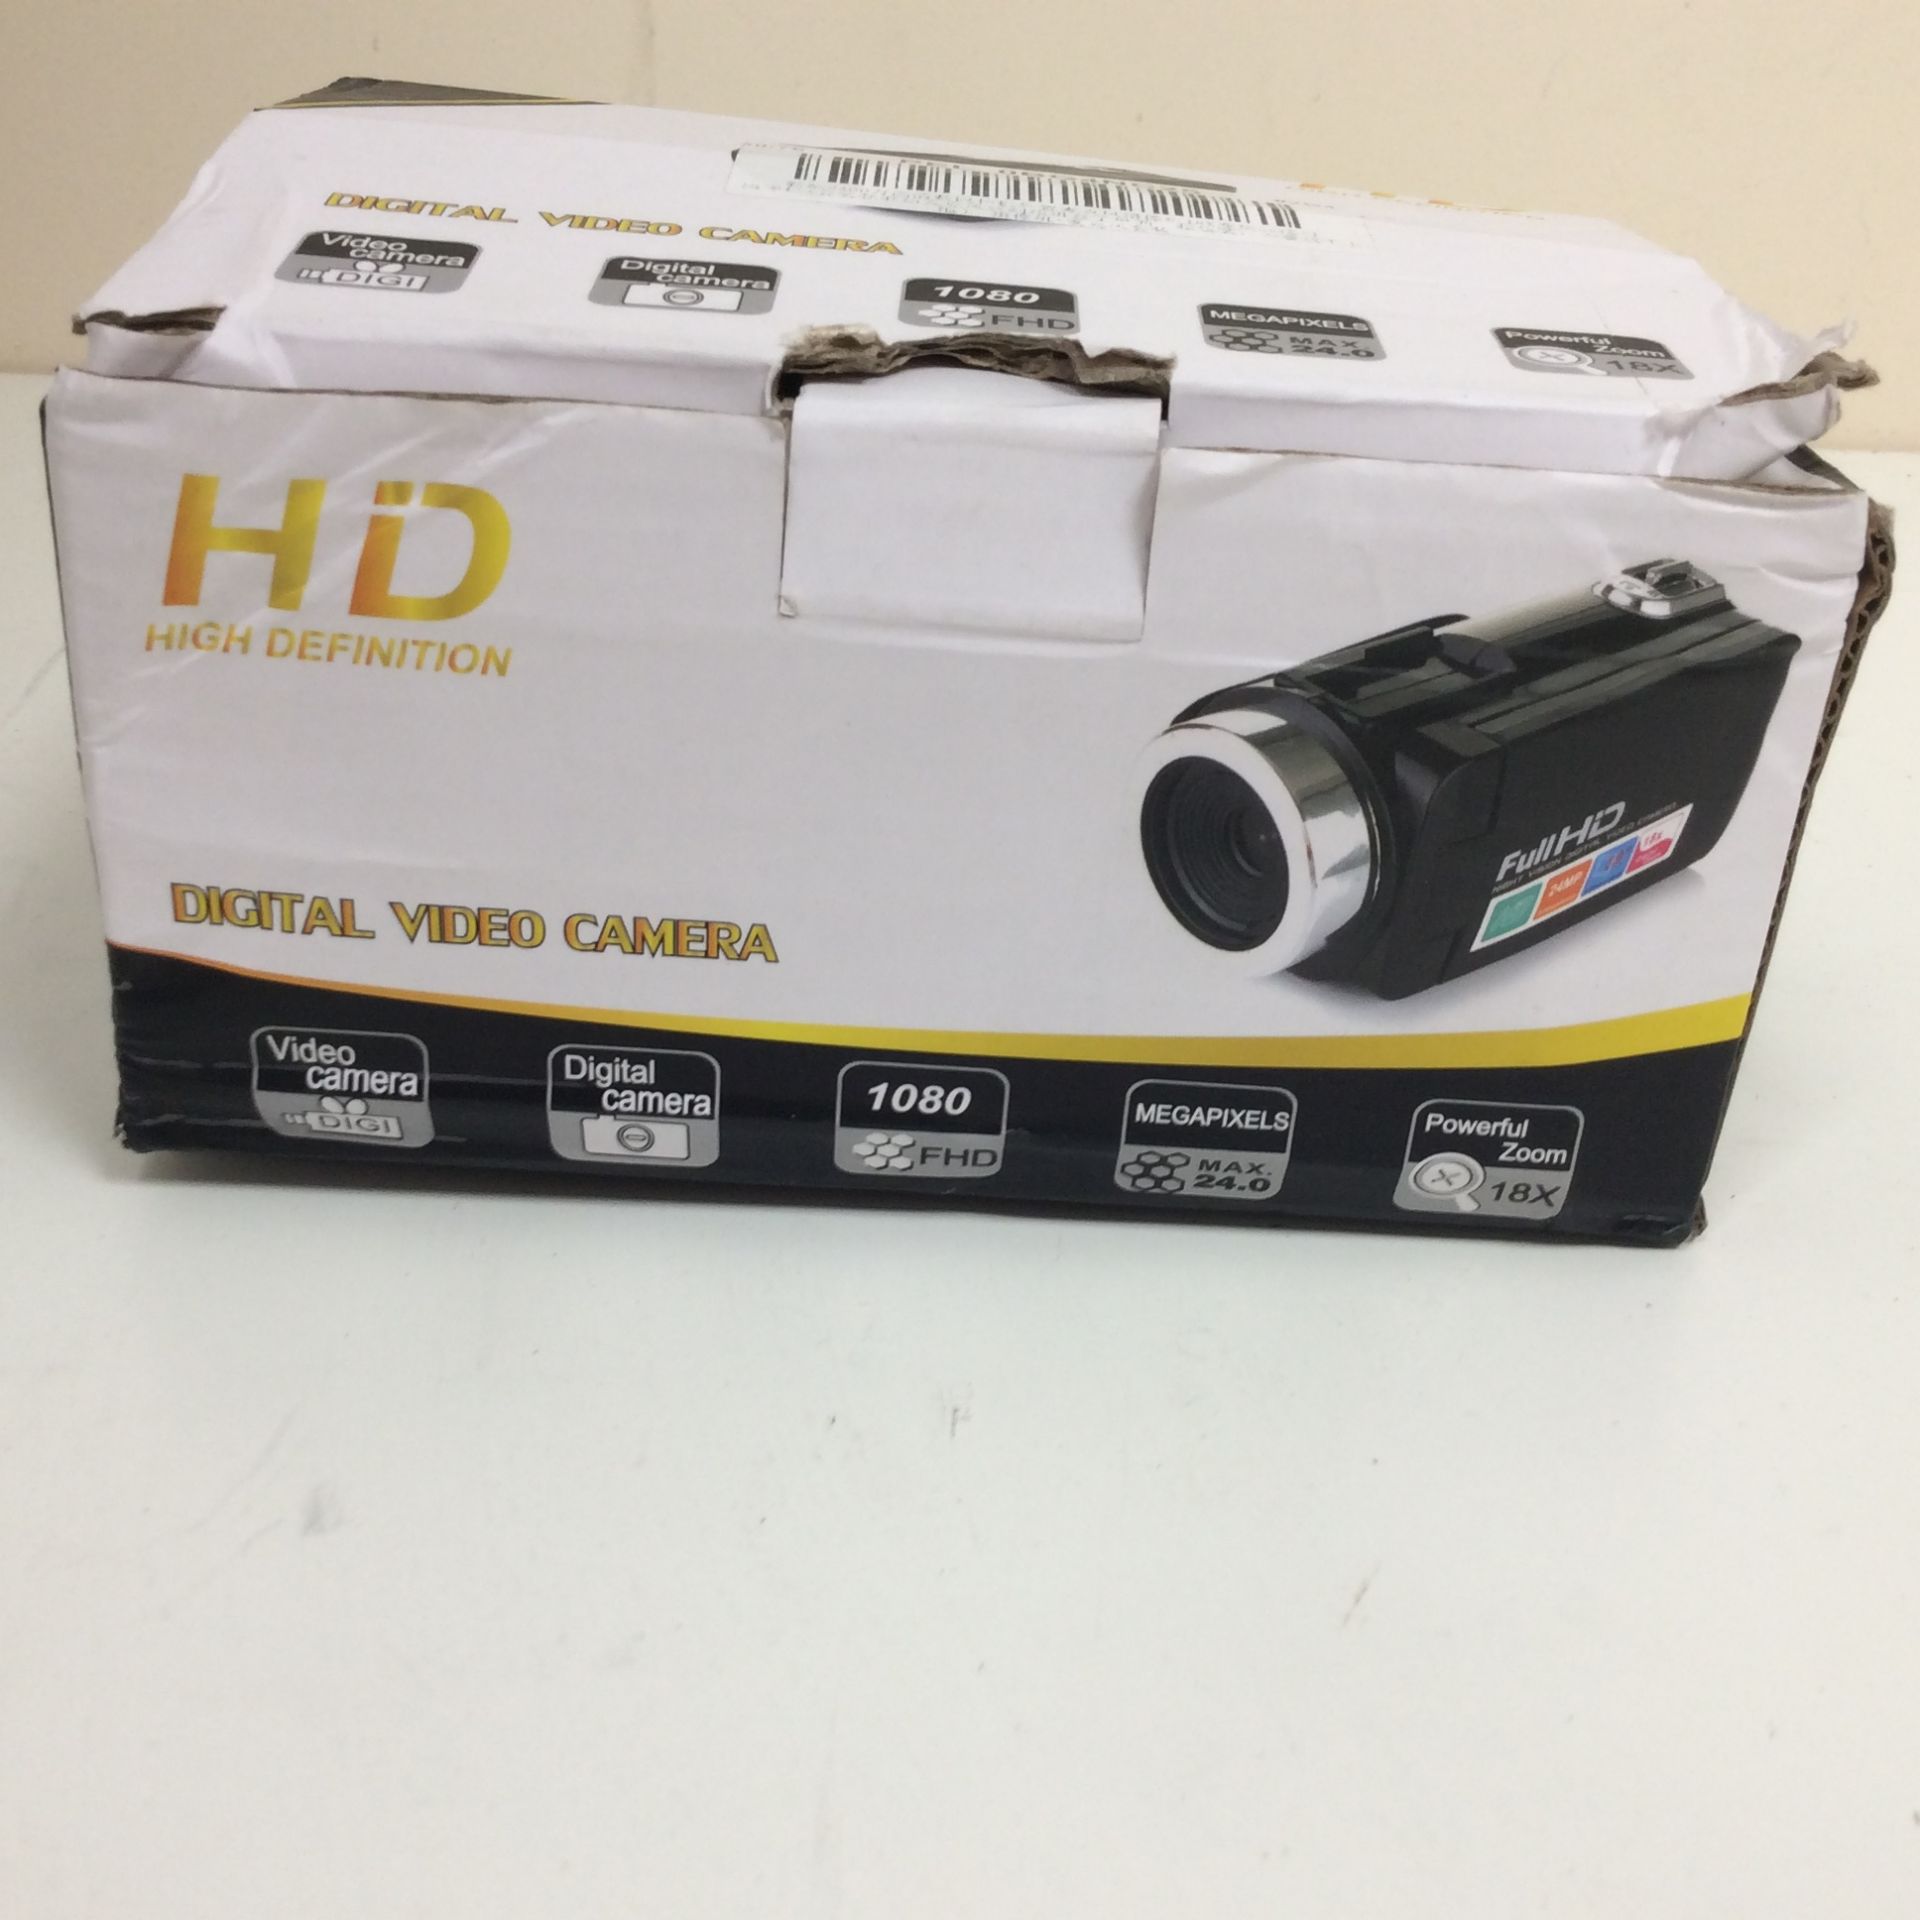 Full hd digital video camera - Image 2 of 3